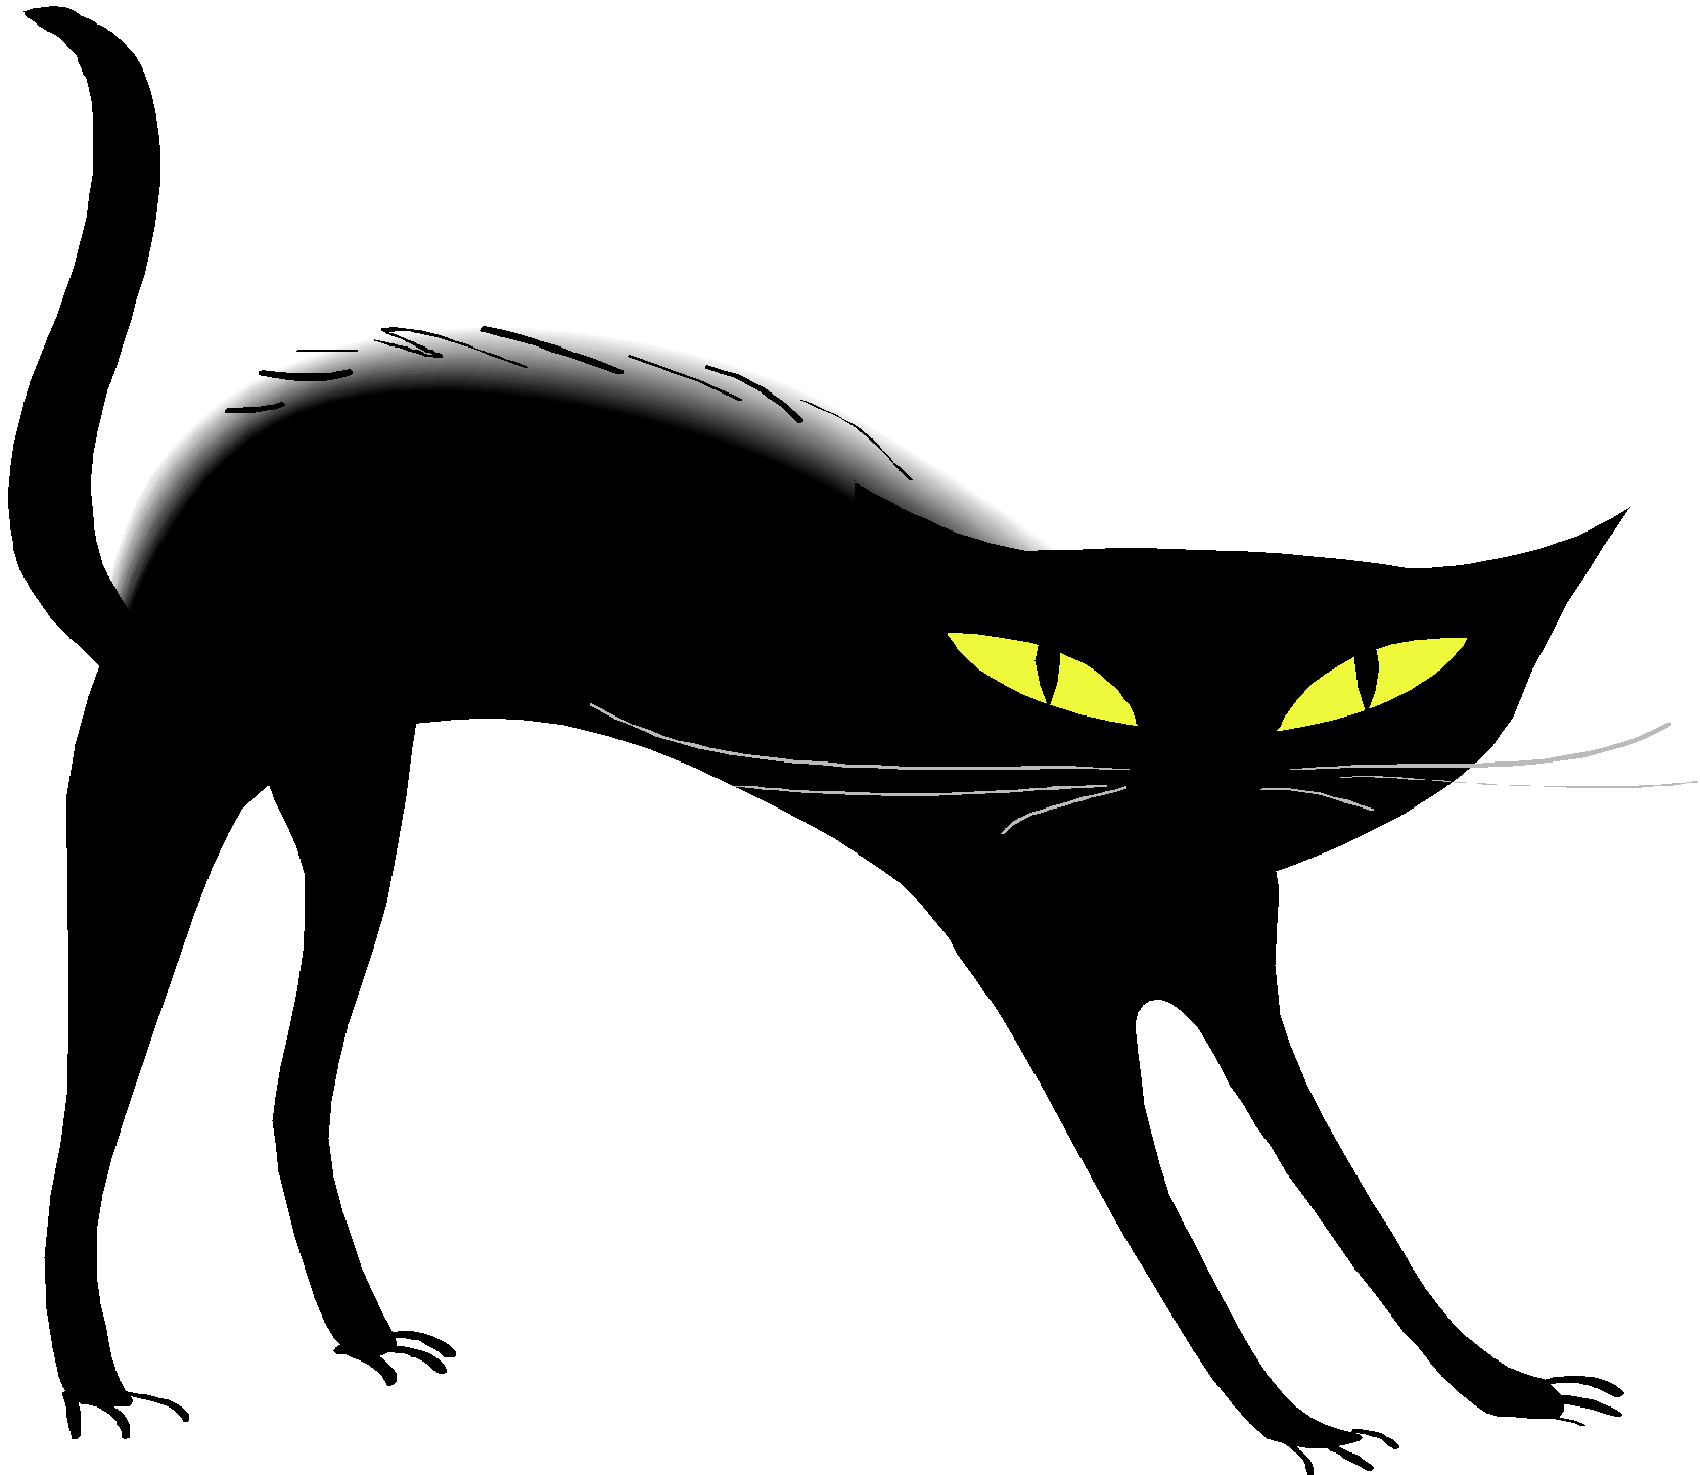 Download Black Cat HQ PNG Image | FreePNGImg